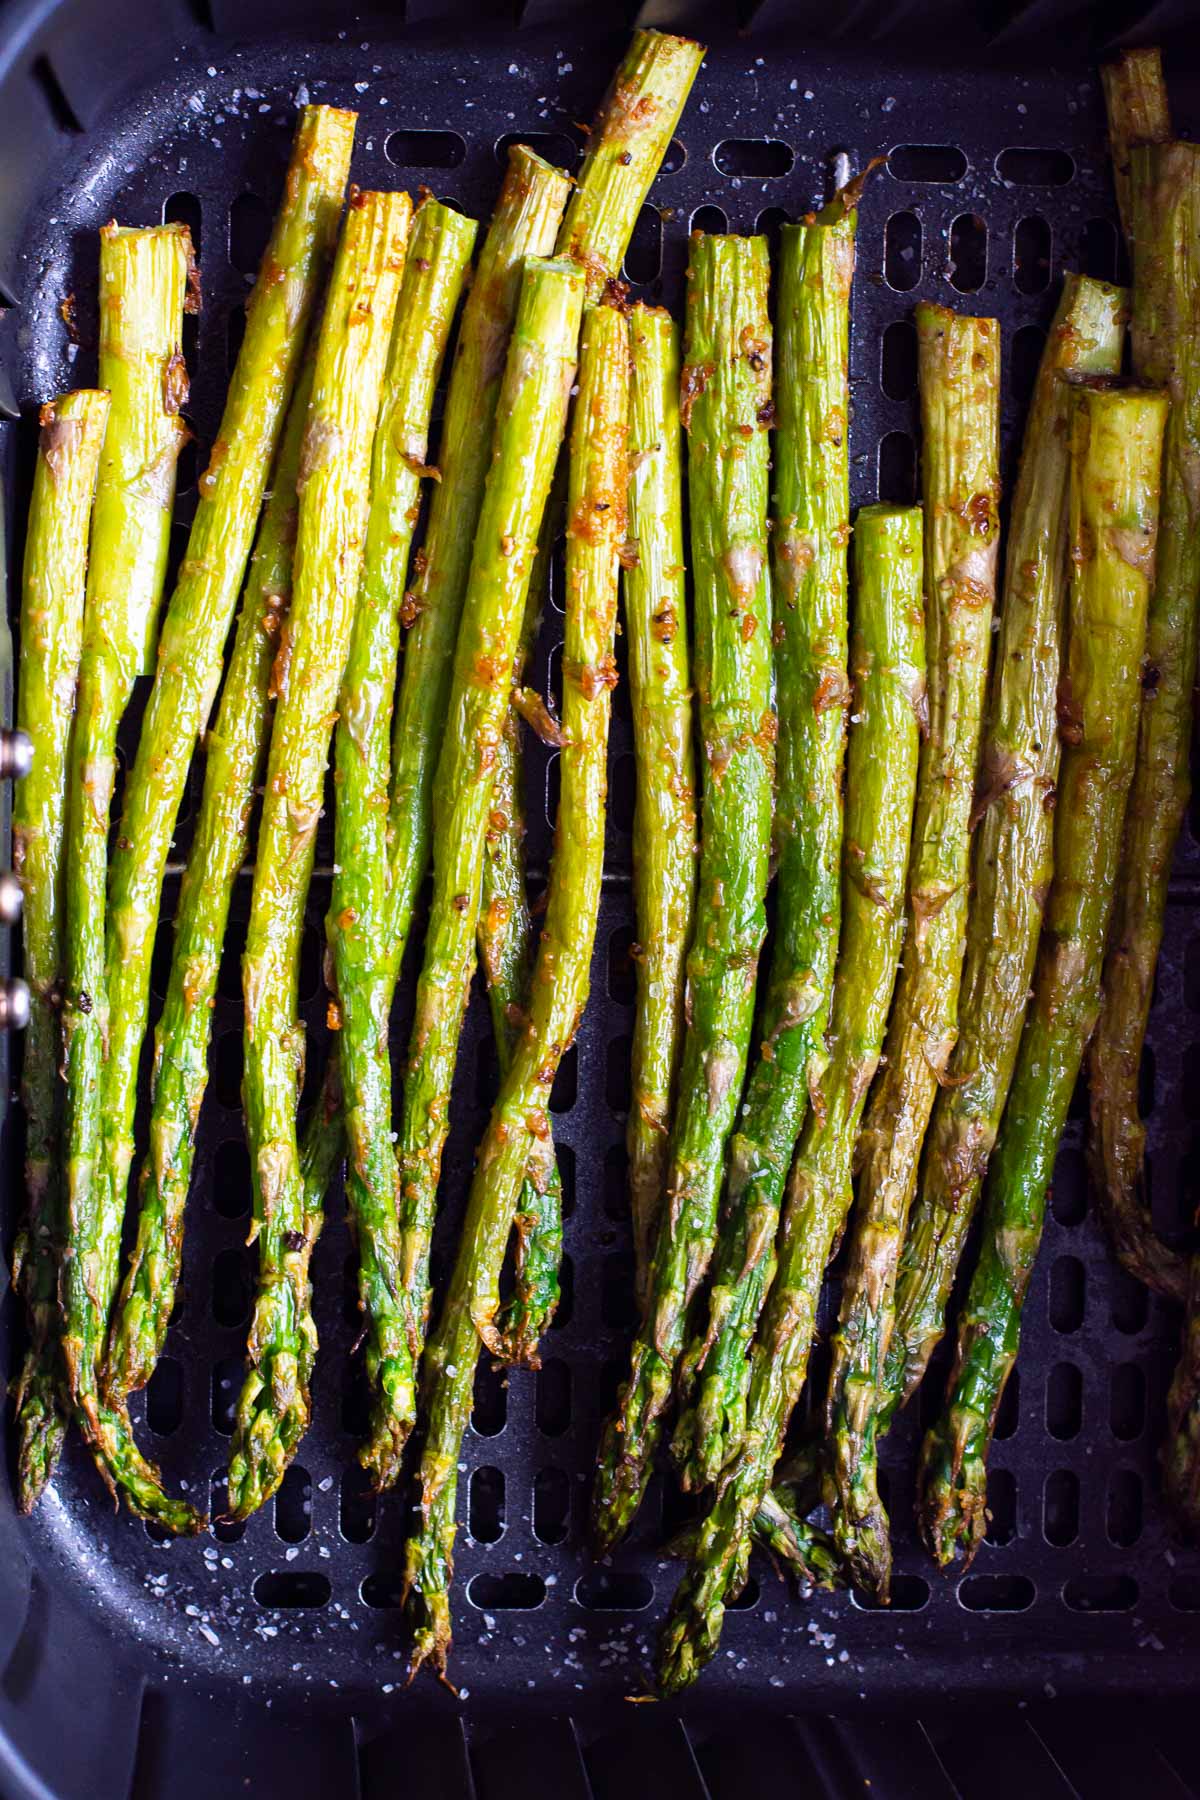 Air fryer asparagus in the air fryer basket with salt.